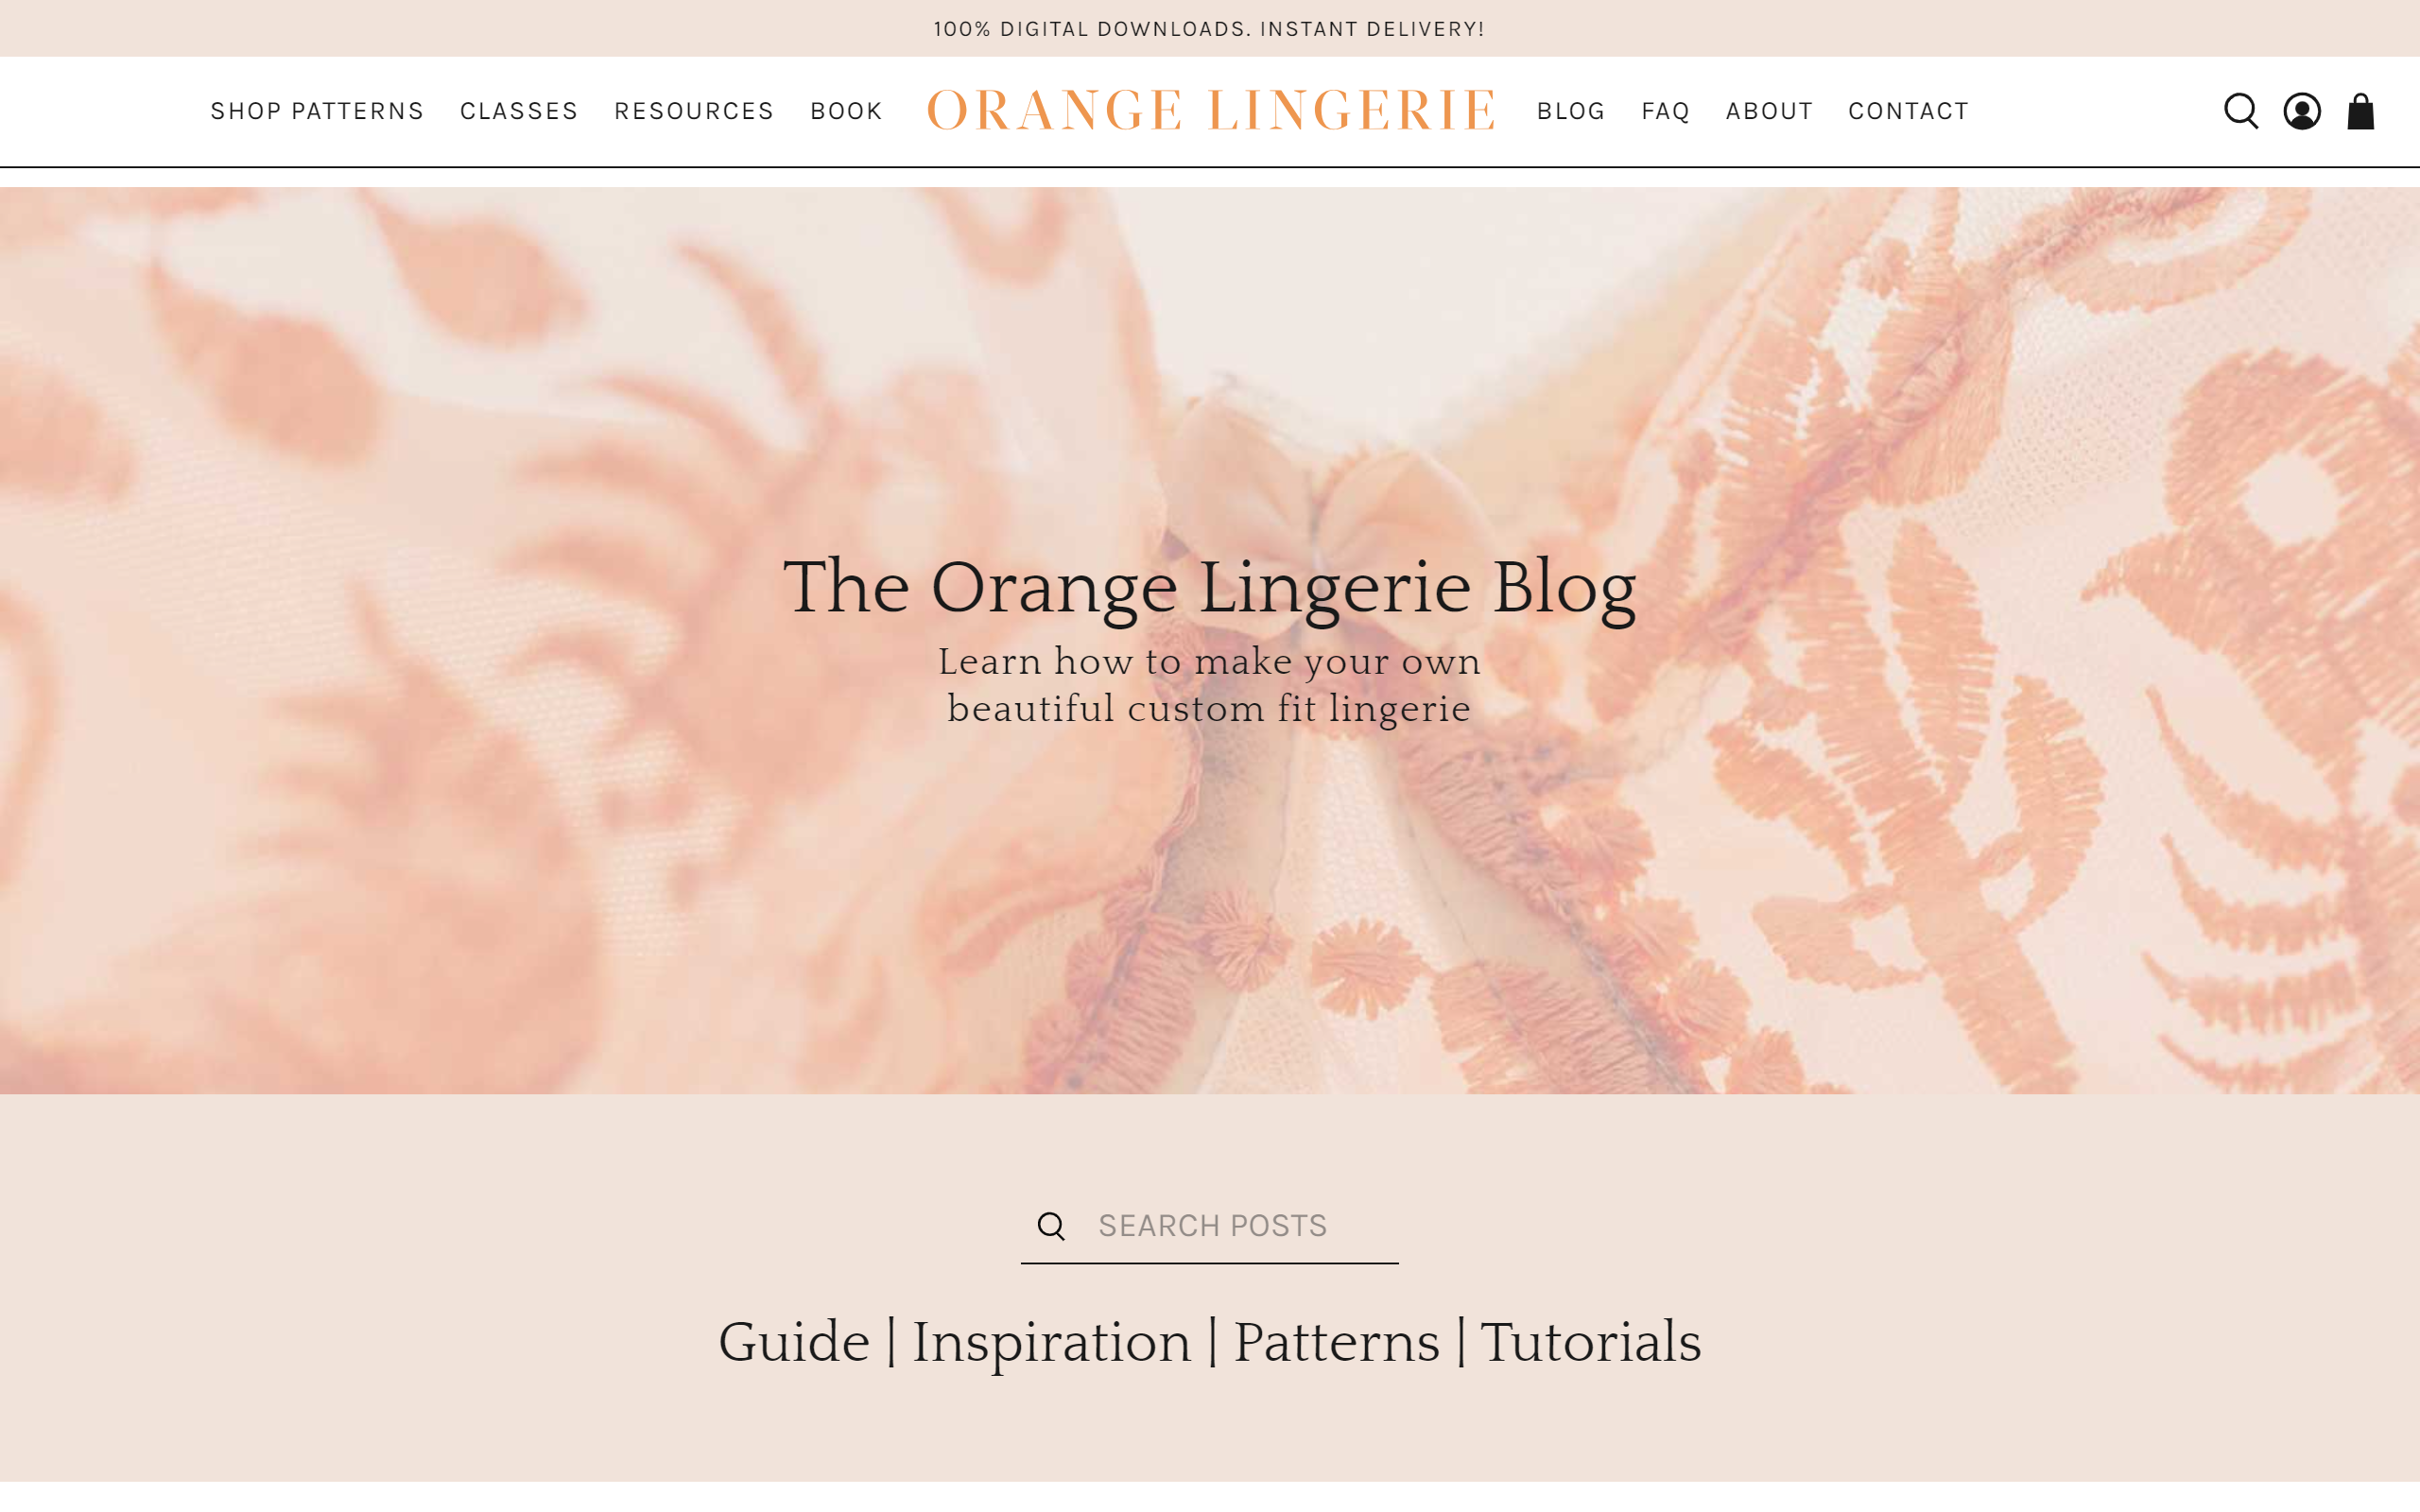 The Orange Lingerie Blog sewing blogs